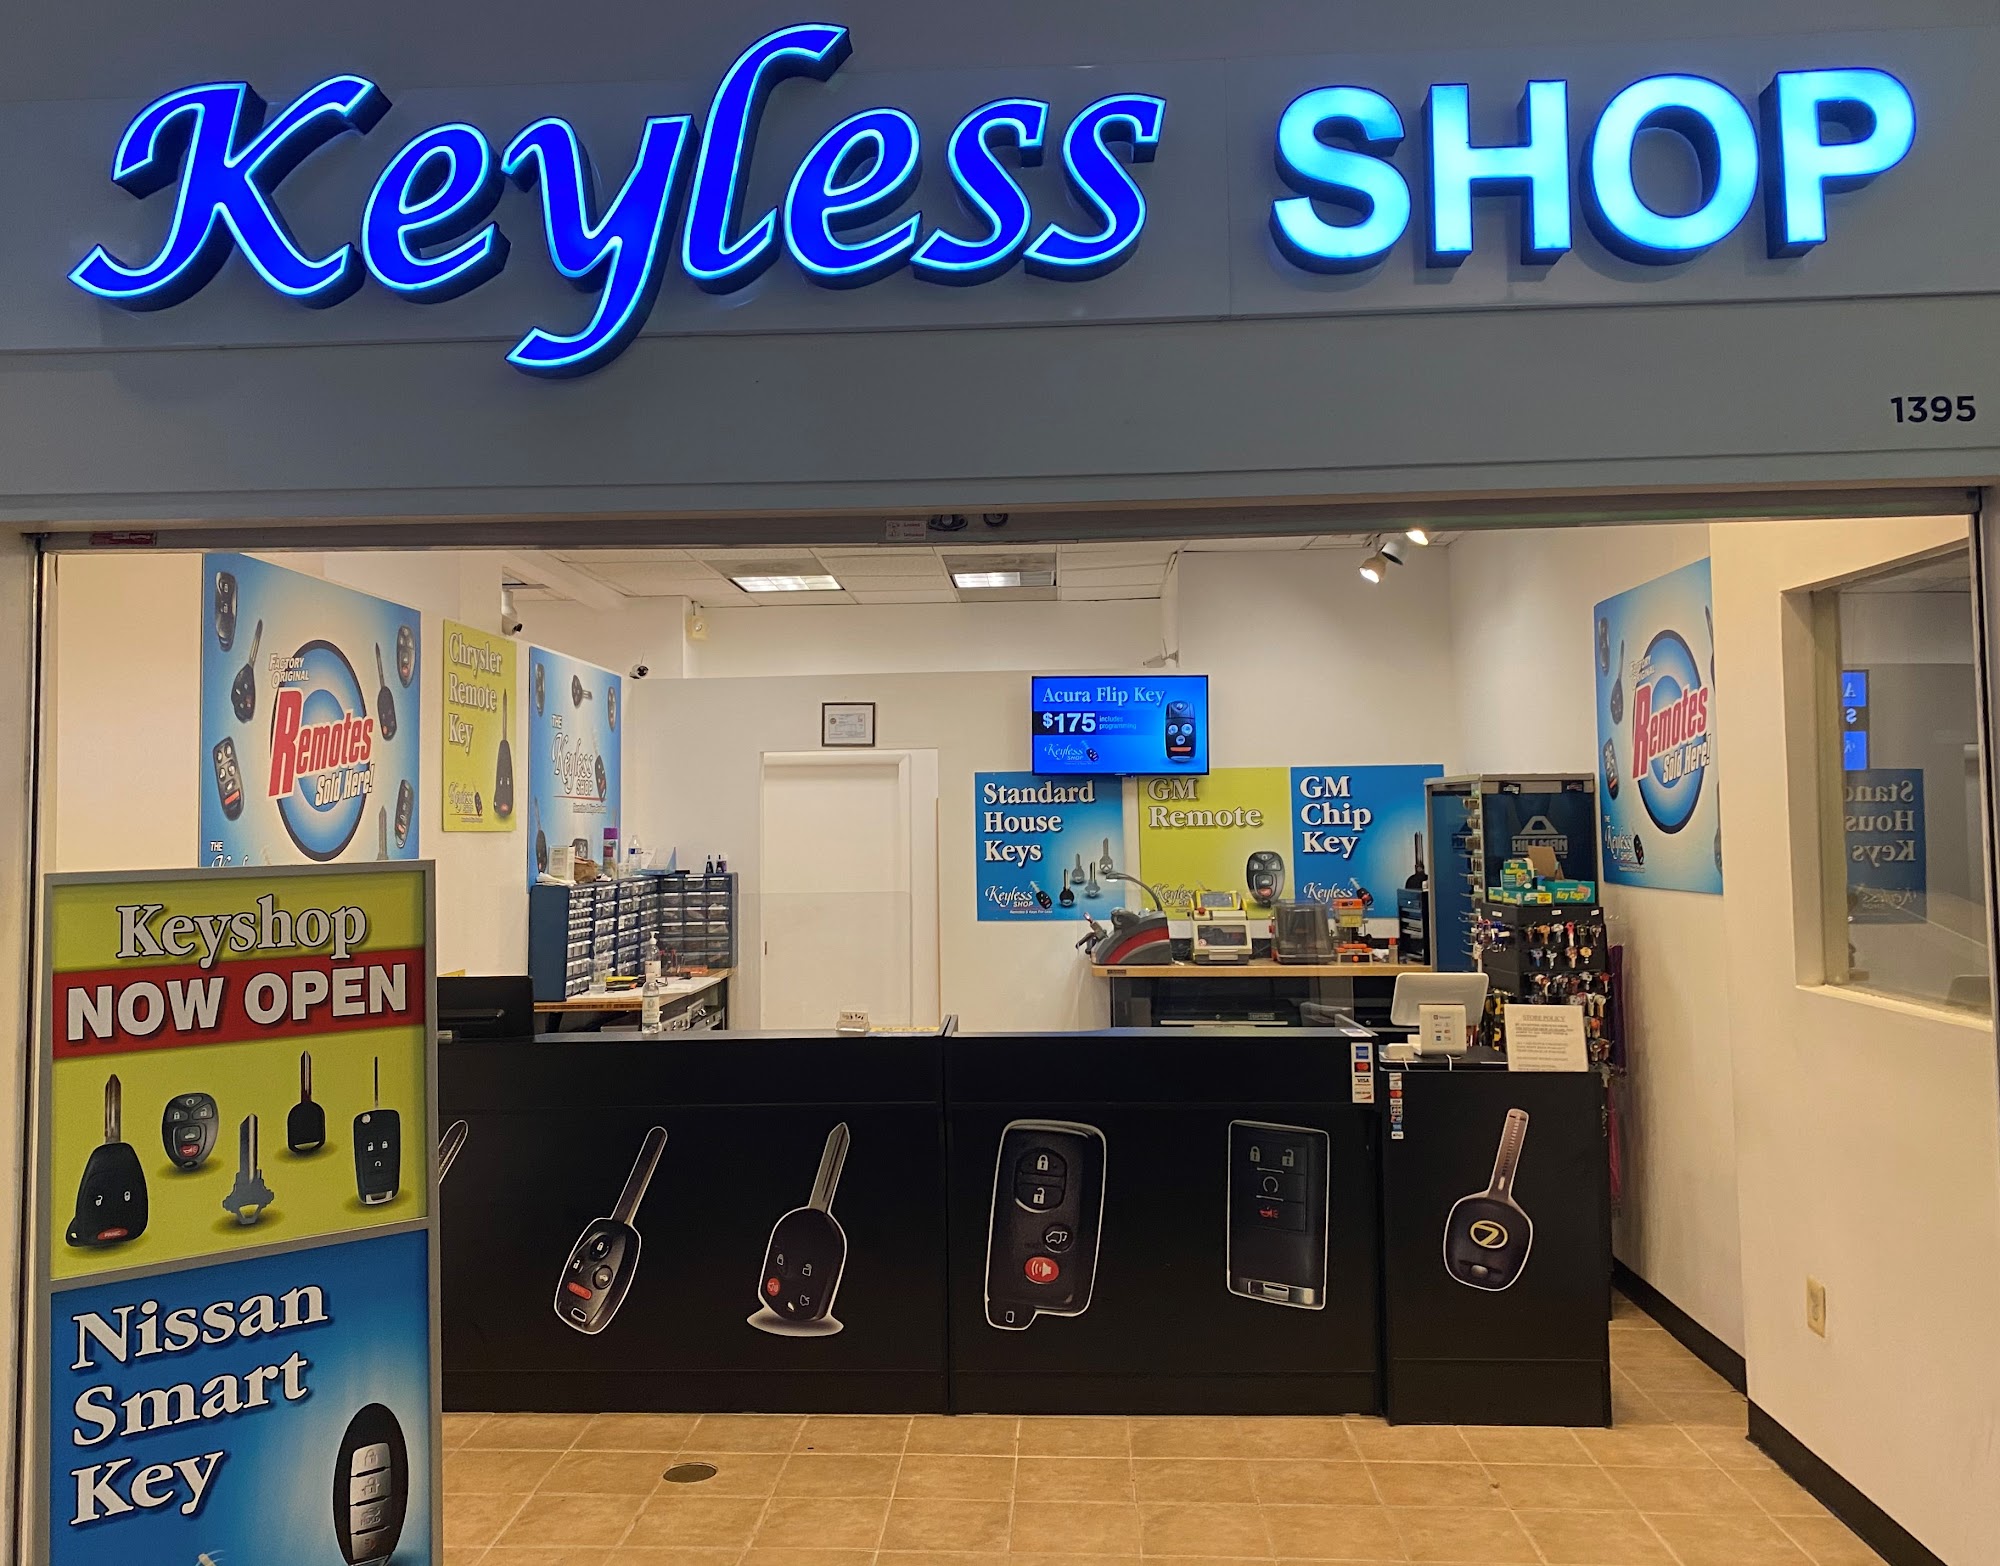 The Keyless Shop at Columbia Mall